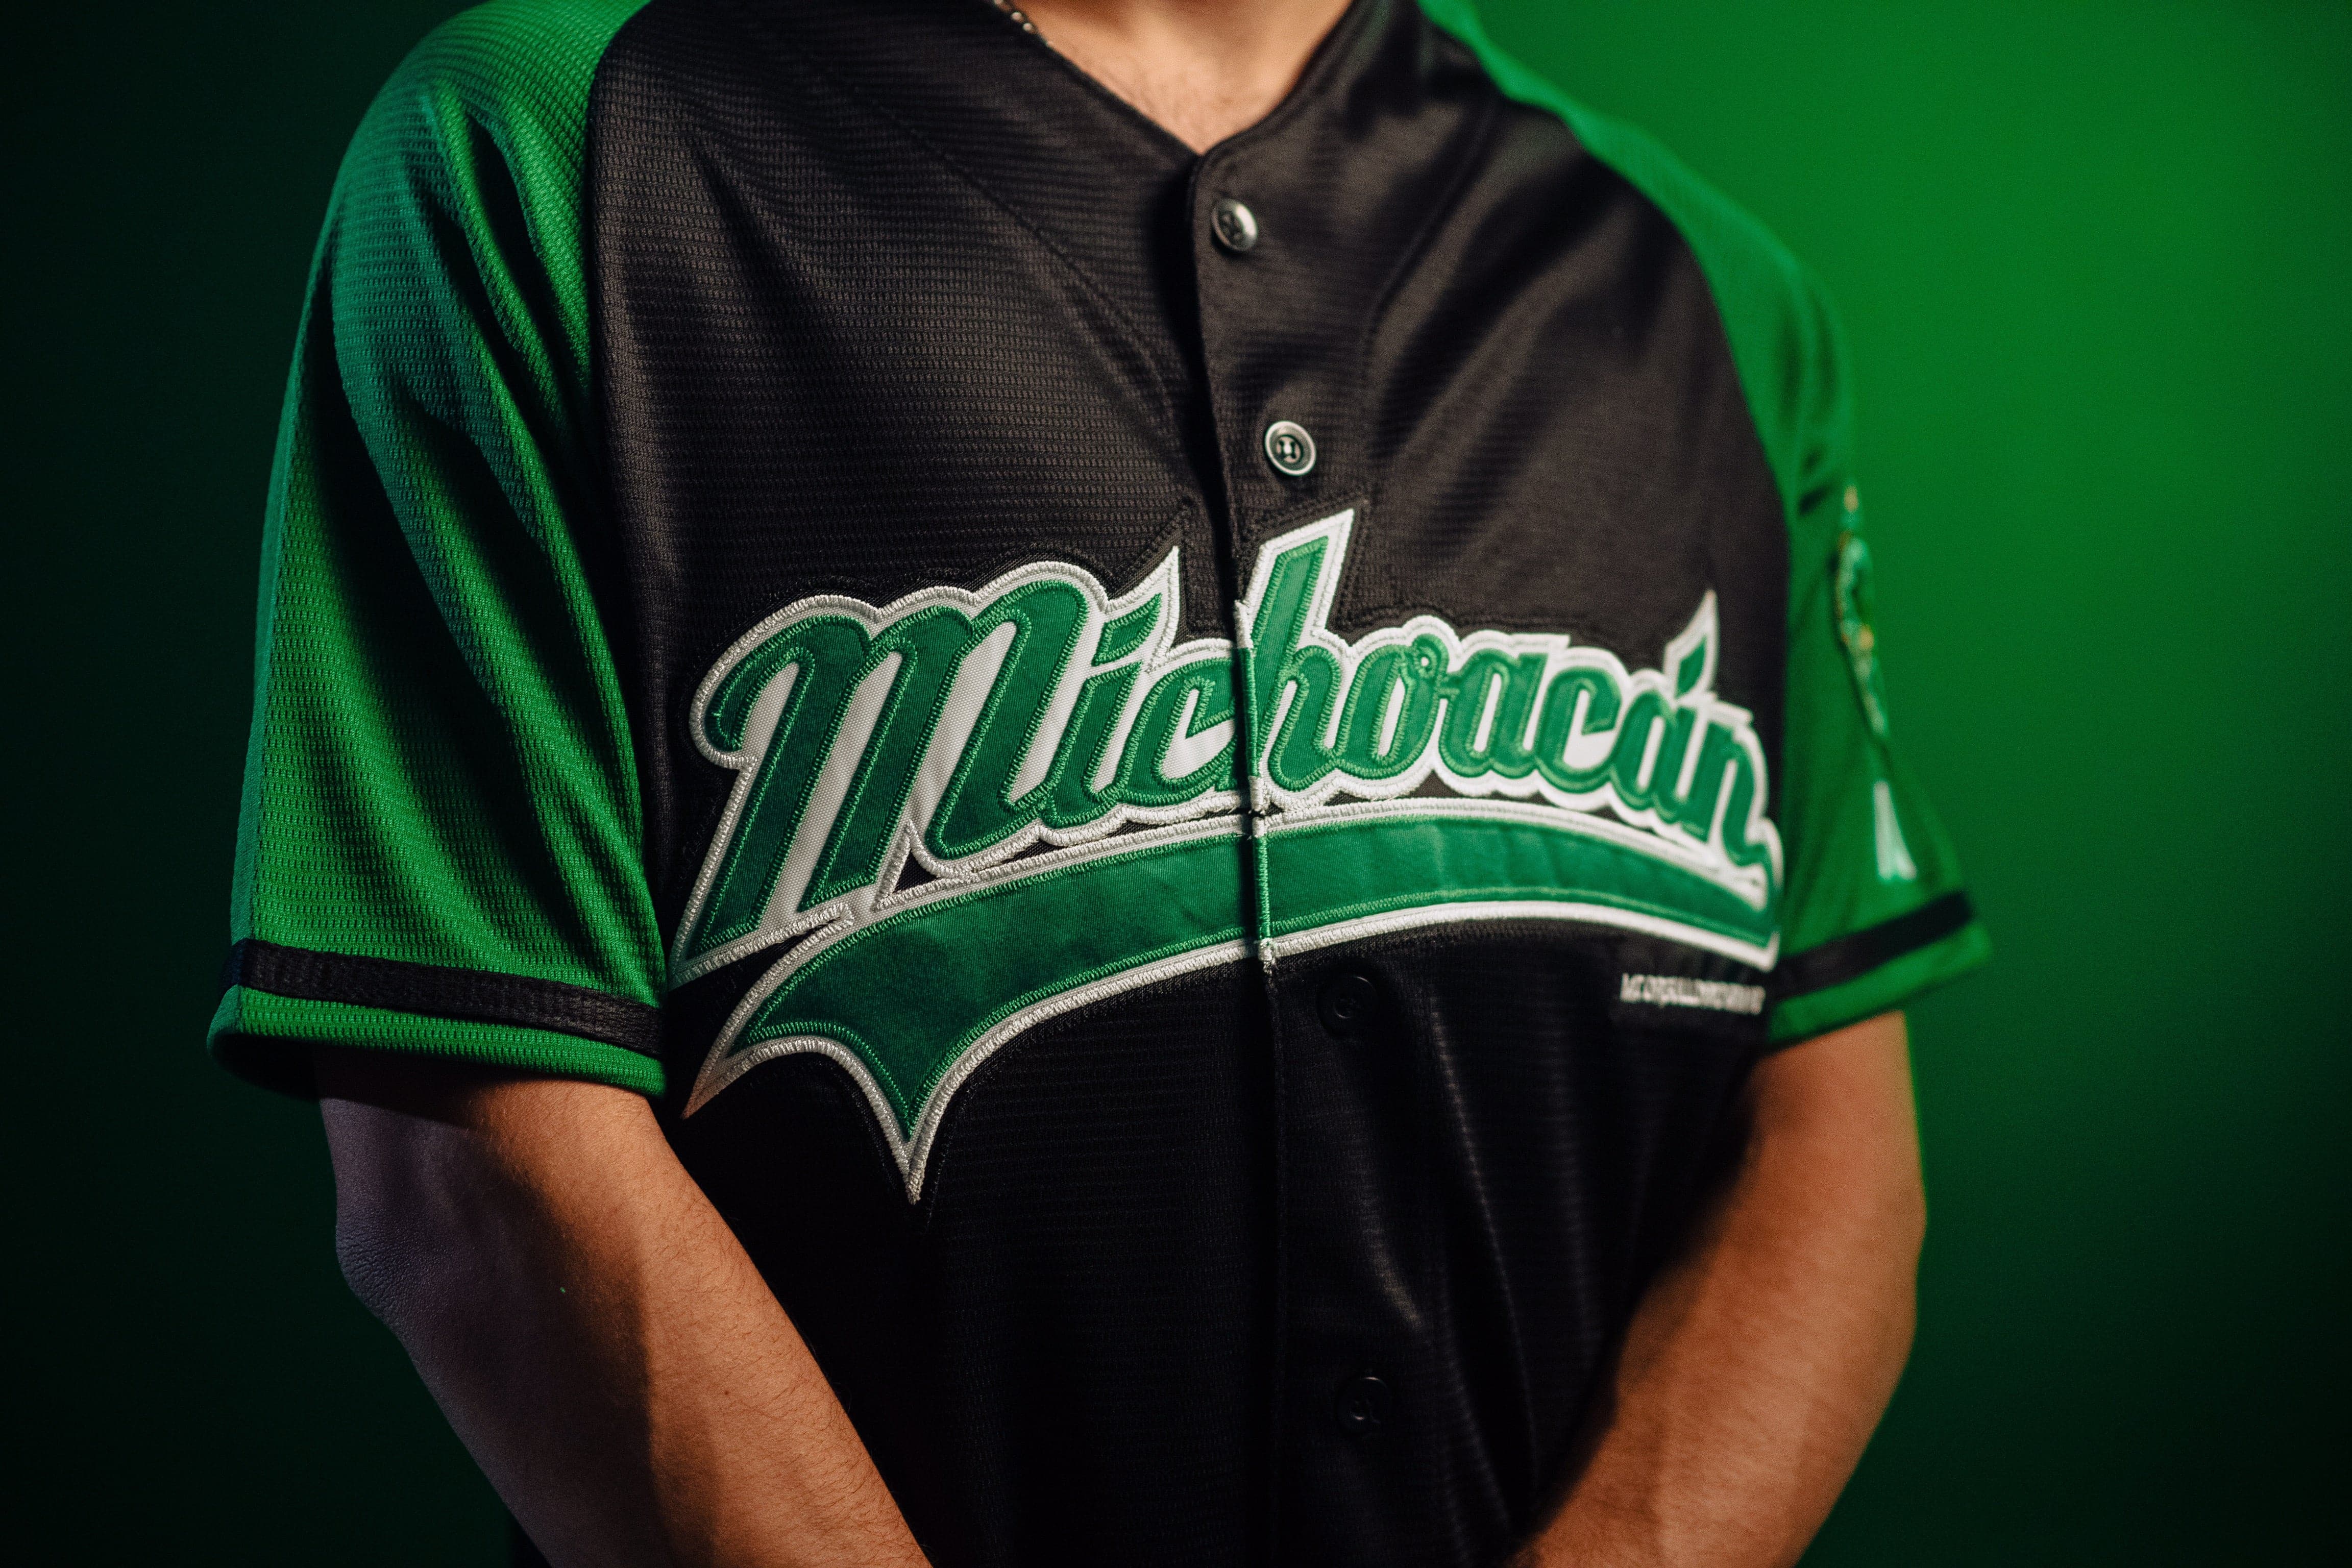  Aguacateros De Michoacan Baseball Men's T-Shirt Los (Small)  Green : Sports & Outdoors